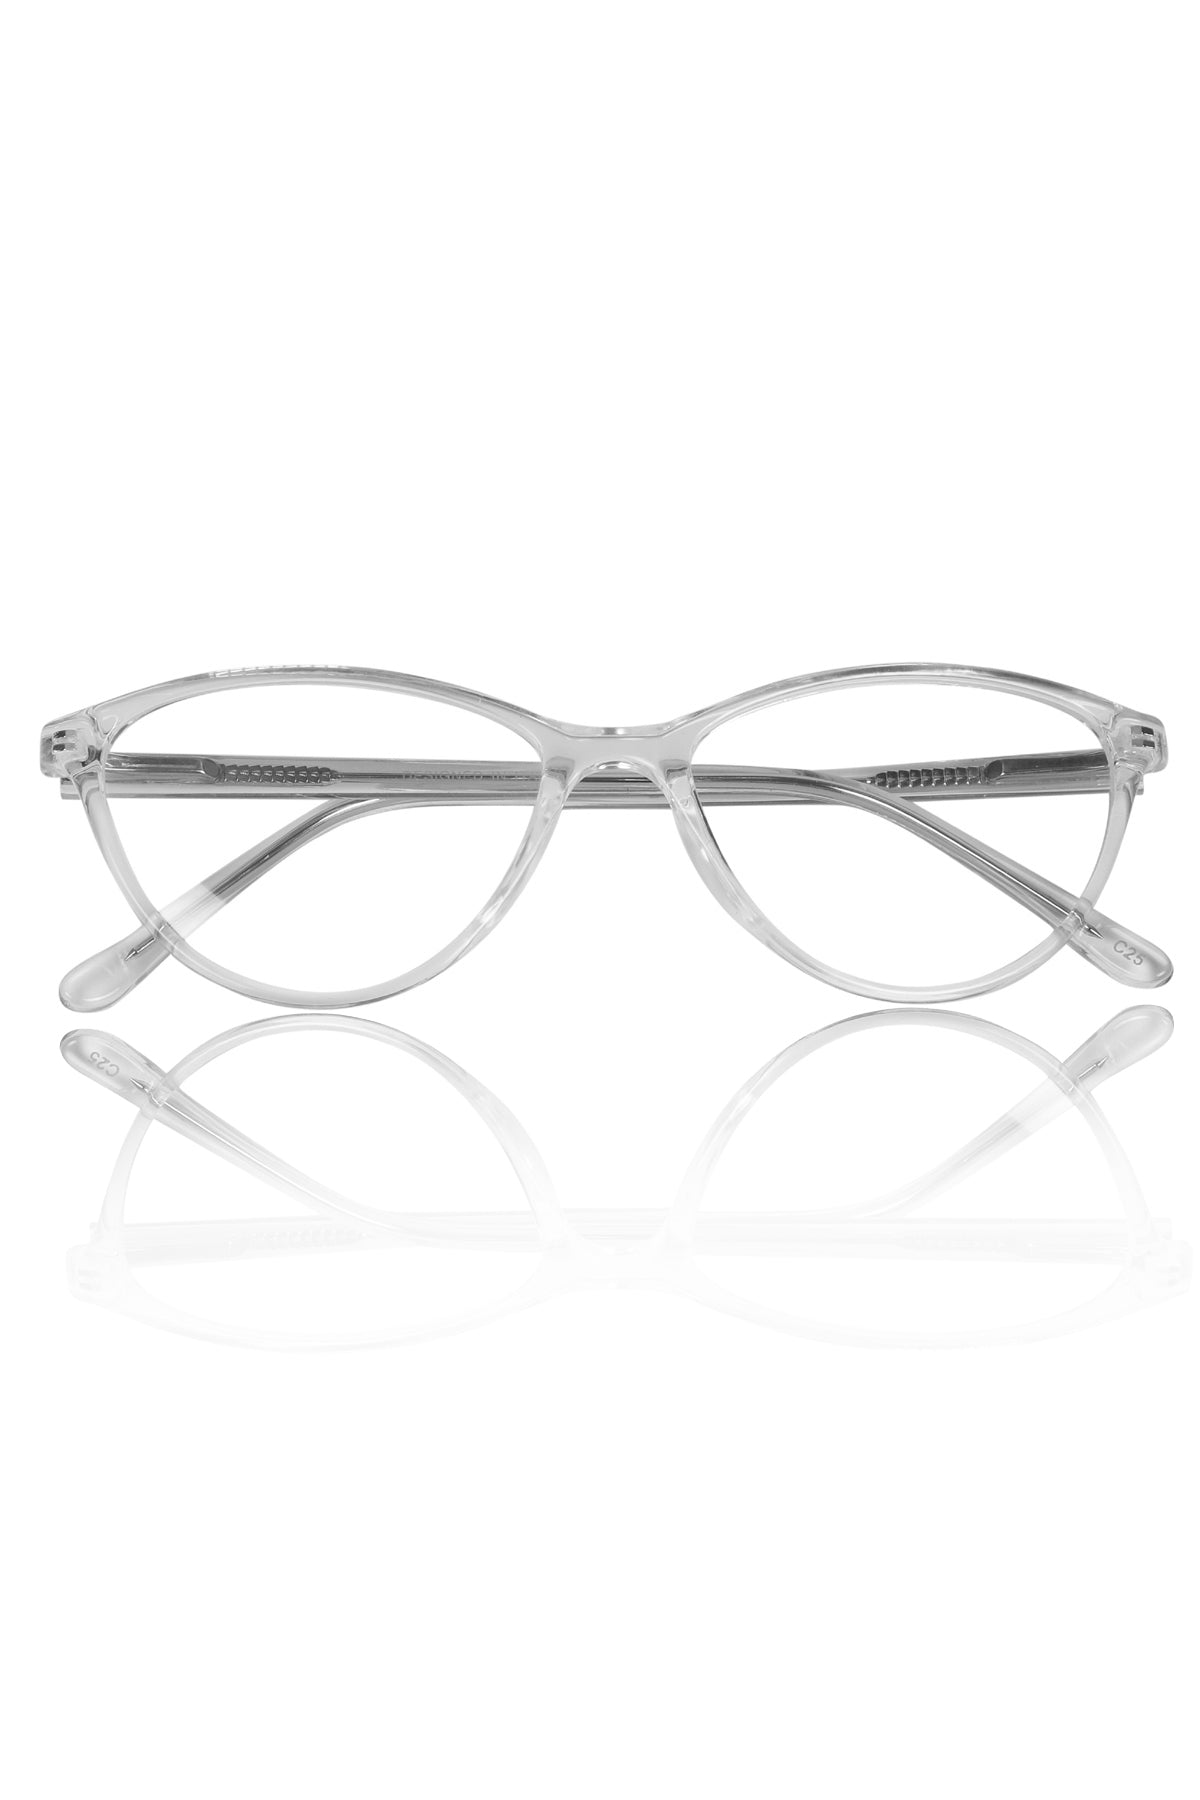 Jodykoes® Premium Series Cat Eye New Design Blu Cut Eyeglasses Pure Acetate Frame | Fashionable Spectacle Eyewear For Women (Transparent) - Jodykoes ®